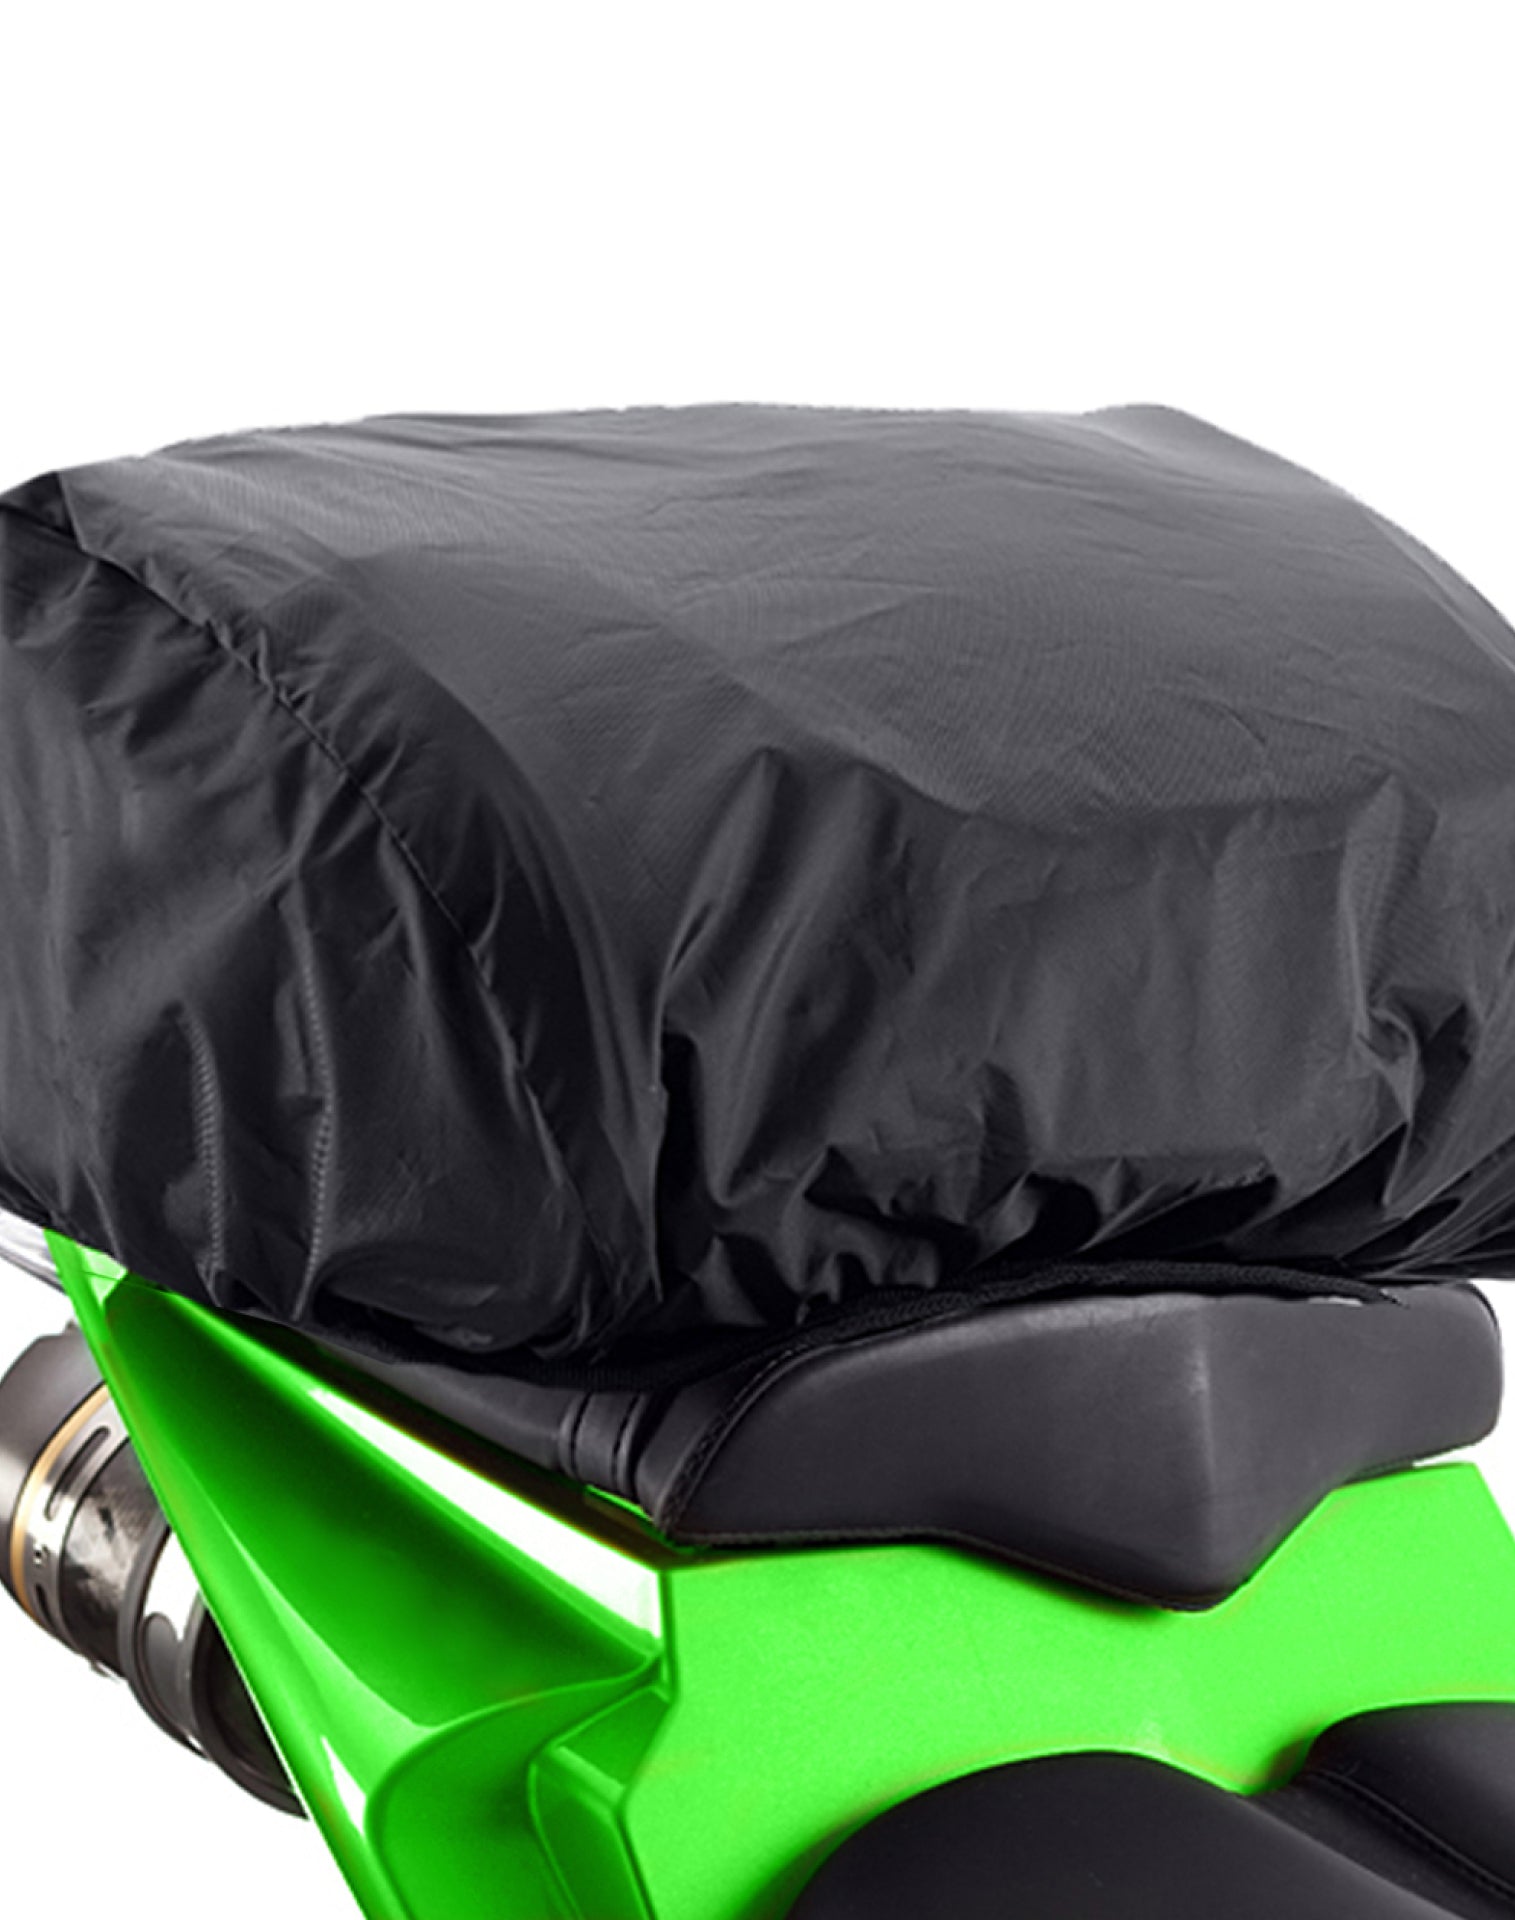 Viking AXE Small Suzuki Motorcycle Tail Bag Durable